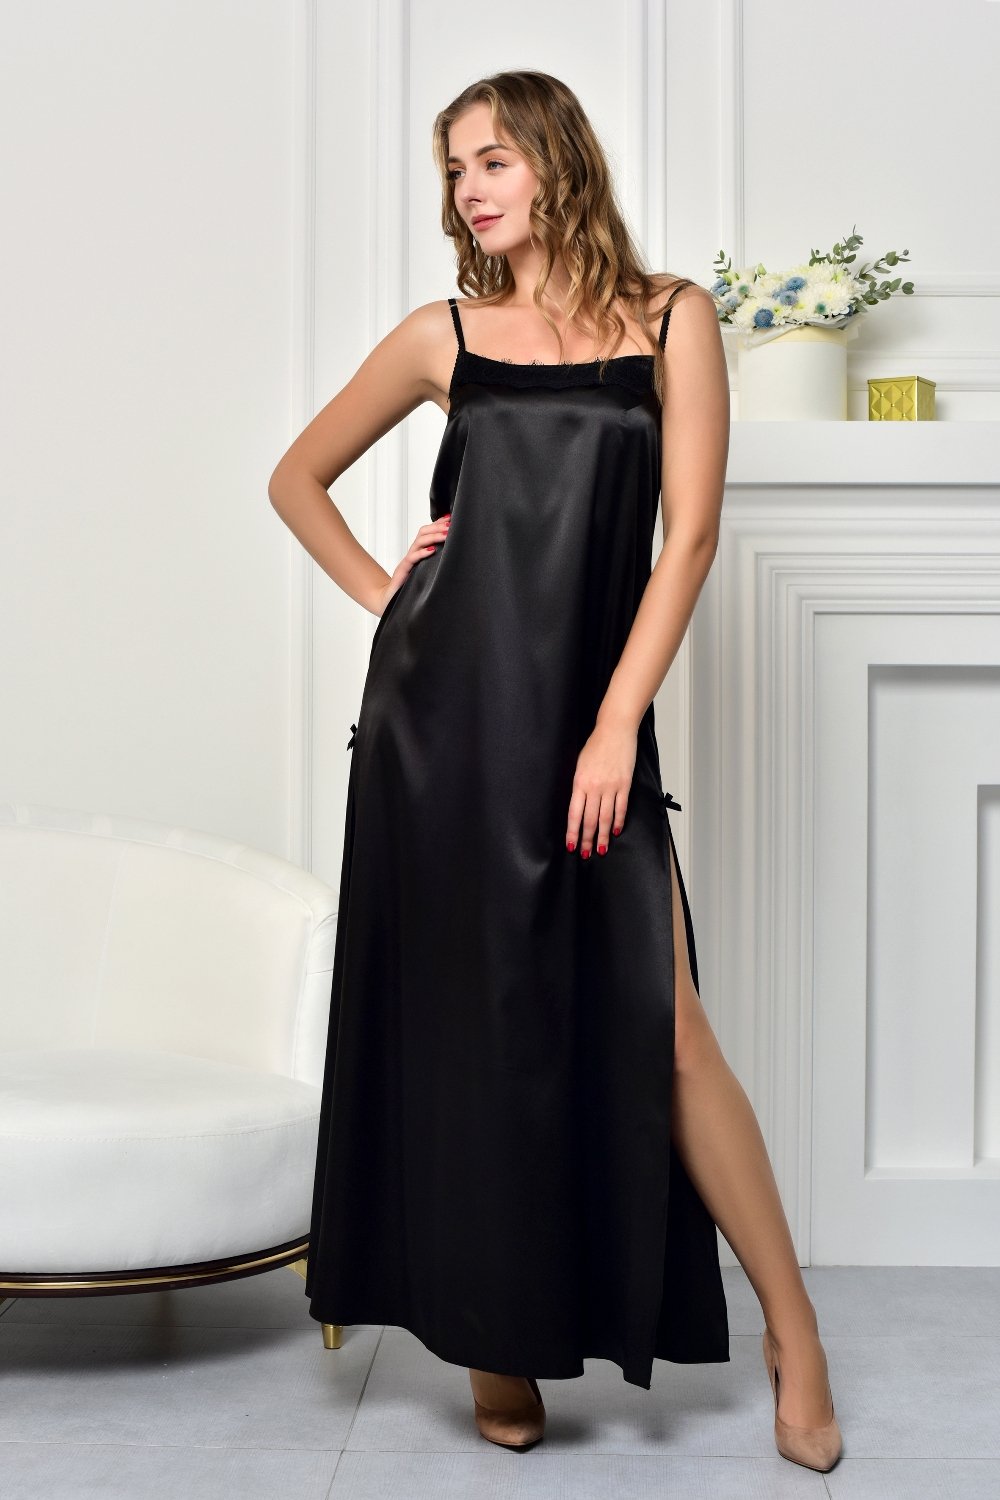 Elegant Side-slit Design on Gothic Nightwear